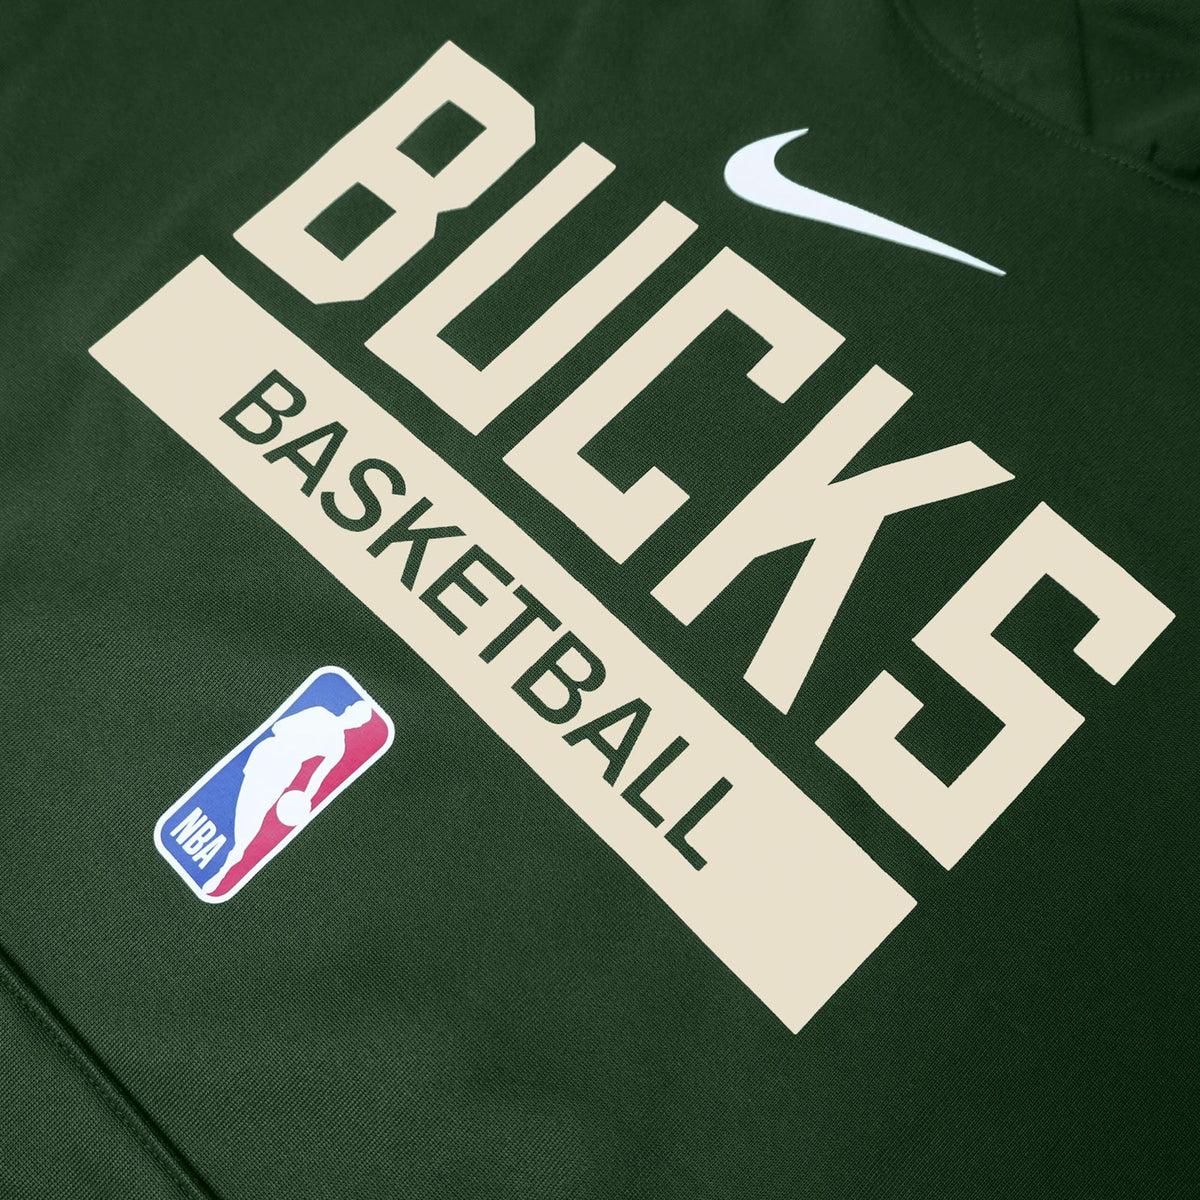 Milwaukee Bucks Men's Nike Dri-FIT NBA Practice T-Shirt